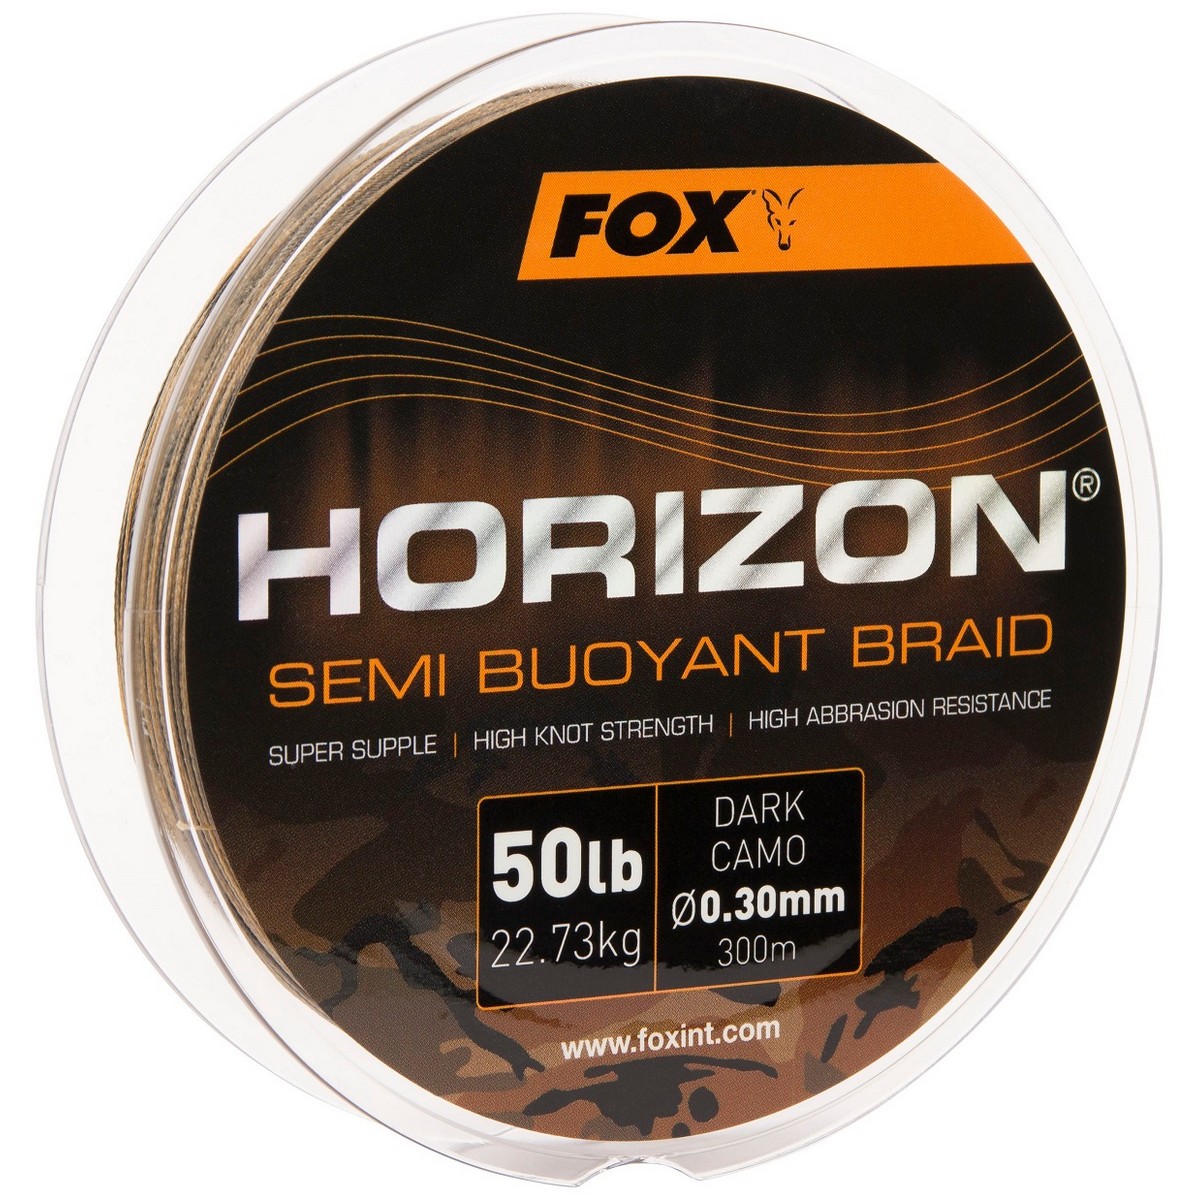 Риболовно влакно Fox Horizon Semi Buoyant Dark Camo Braid 300m